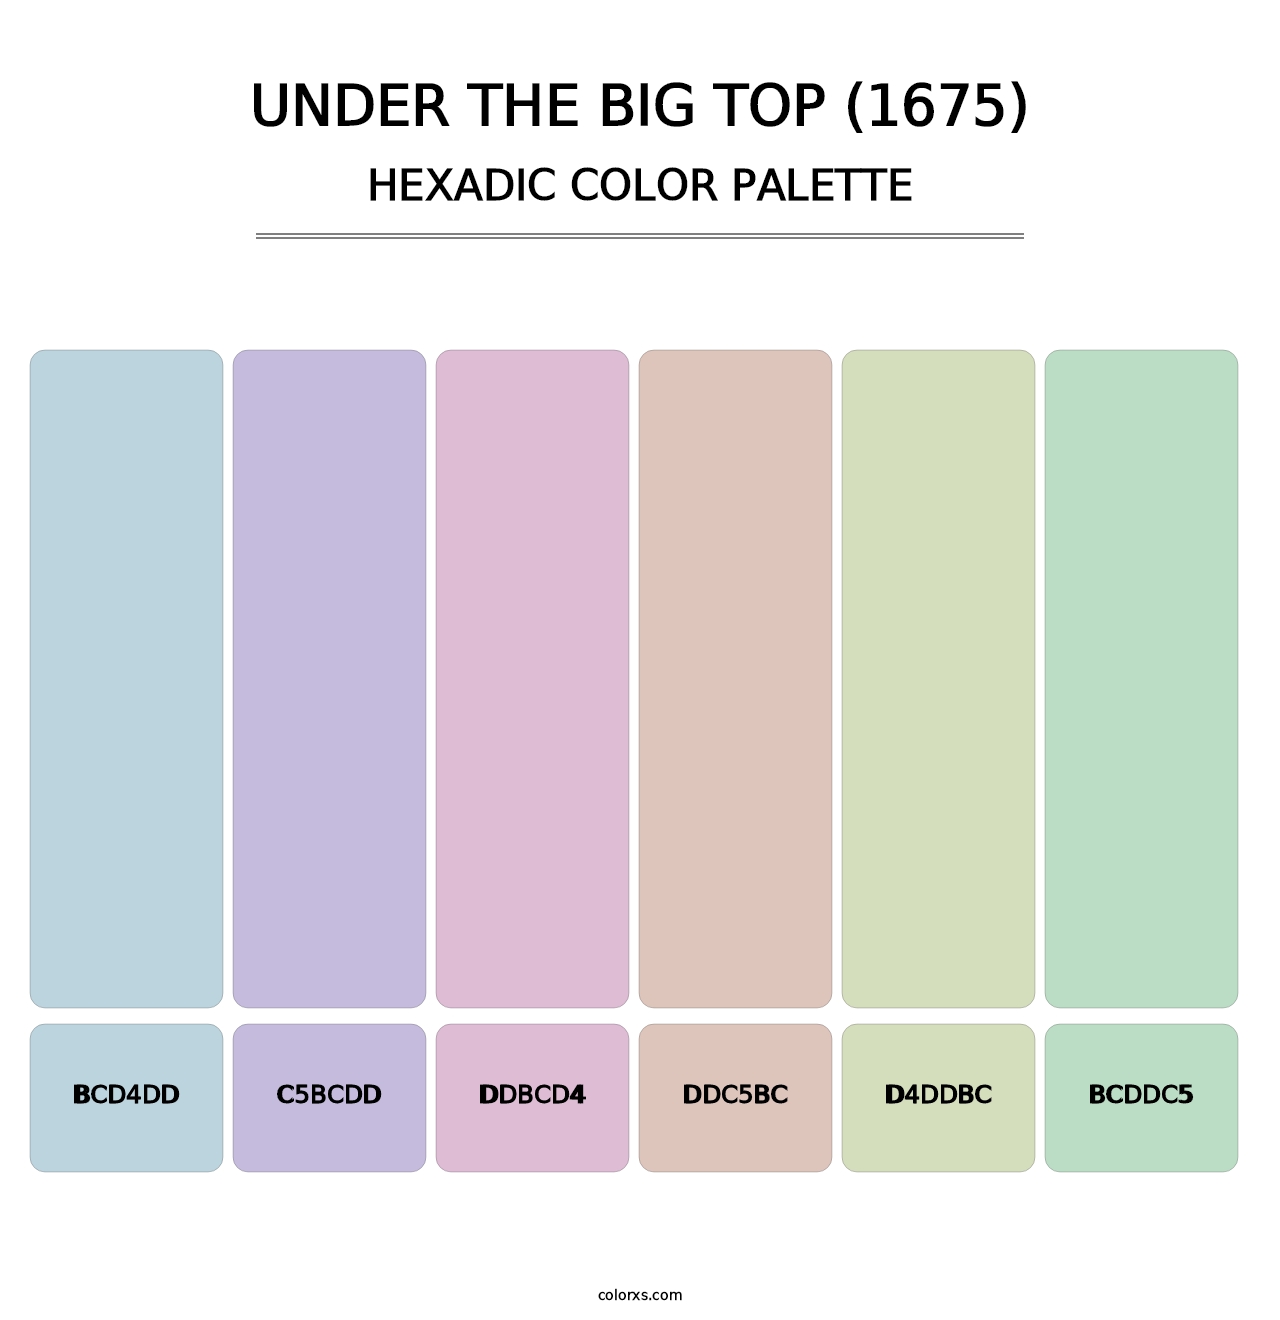 Under the Big Top (1675) - Hexadic Color Palette